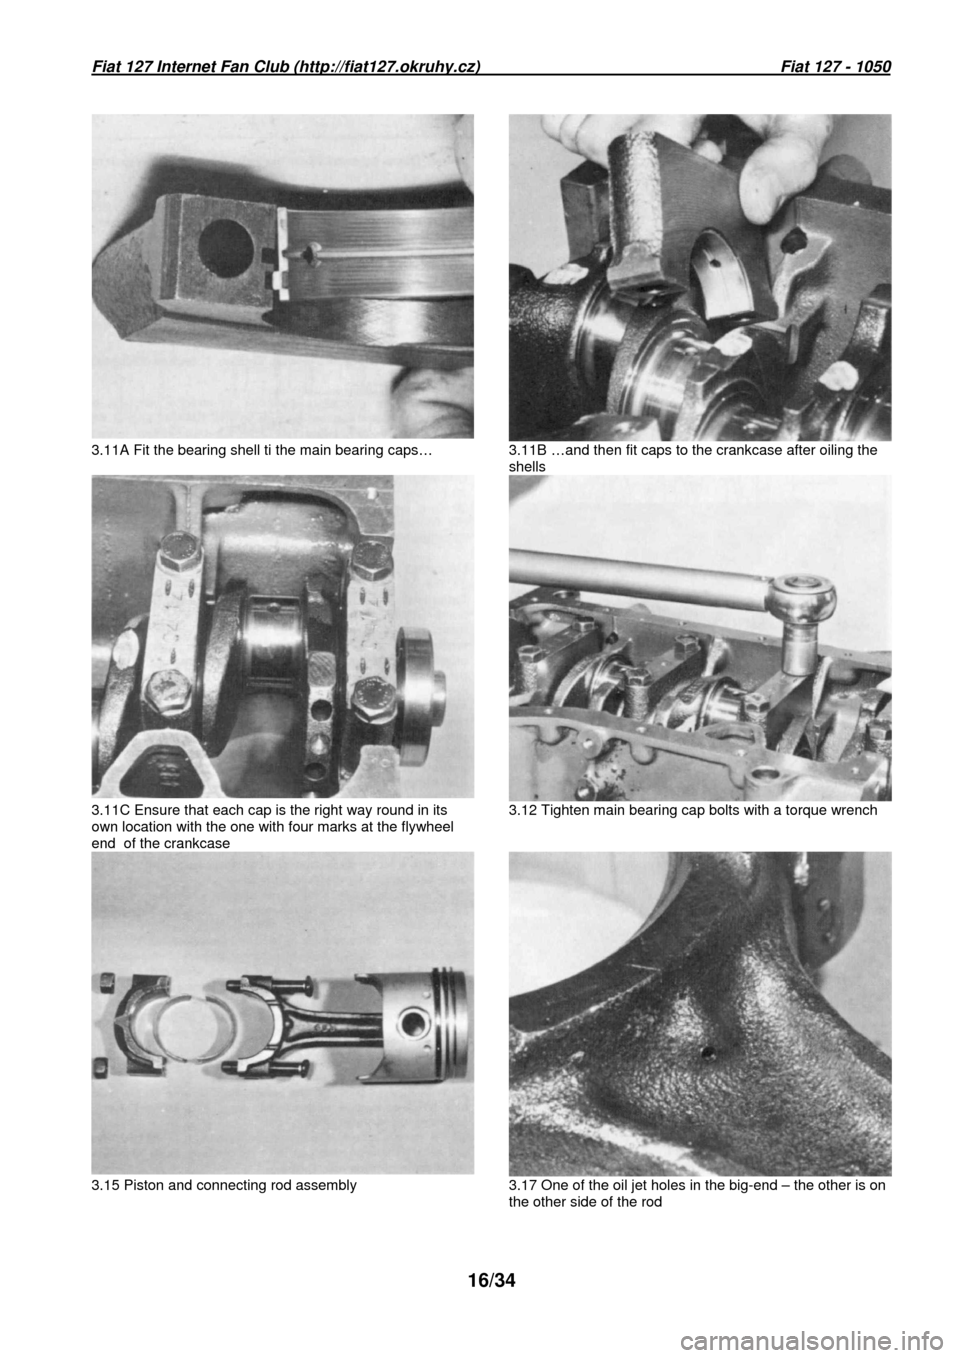 FIAT 127 1980 2.G Workshop Manual Fiat 127 Internet Fan Club (http://fiat127.okruhy.cz)                                                                   Fiat 127 - 1050 
16/34 
 
 
 3.11A Fit the bearing shell ti the main bearing cap